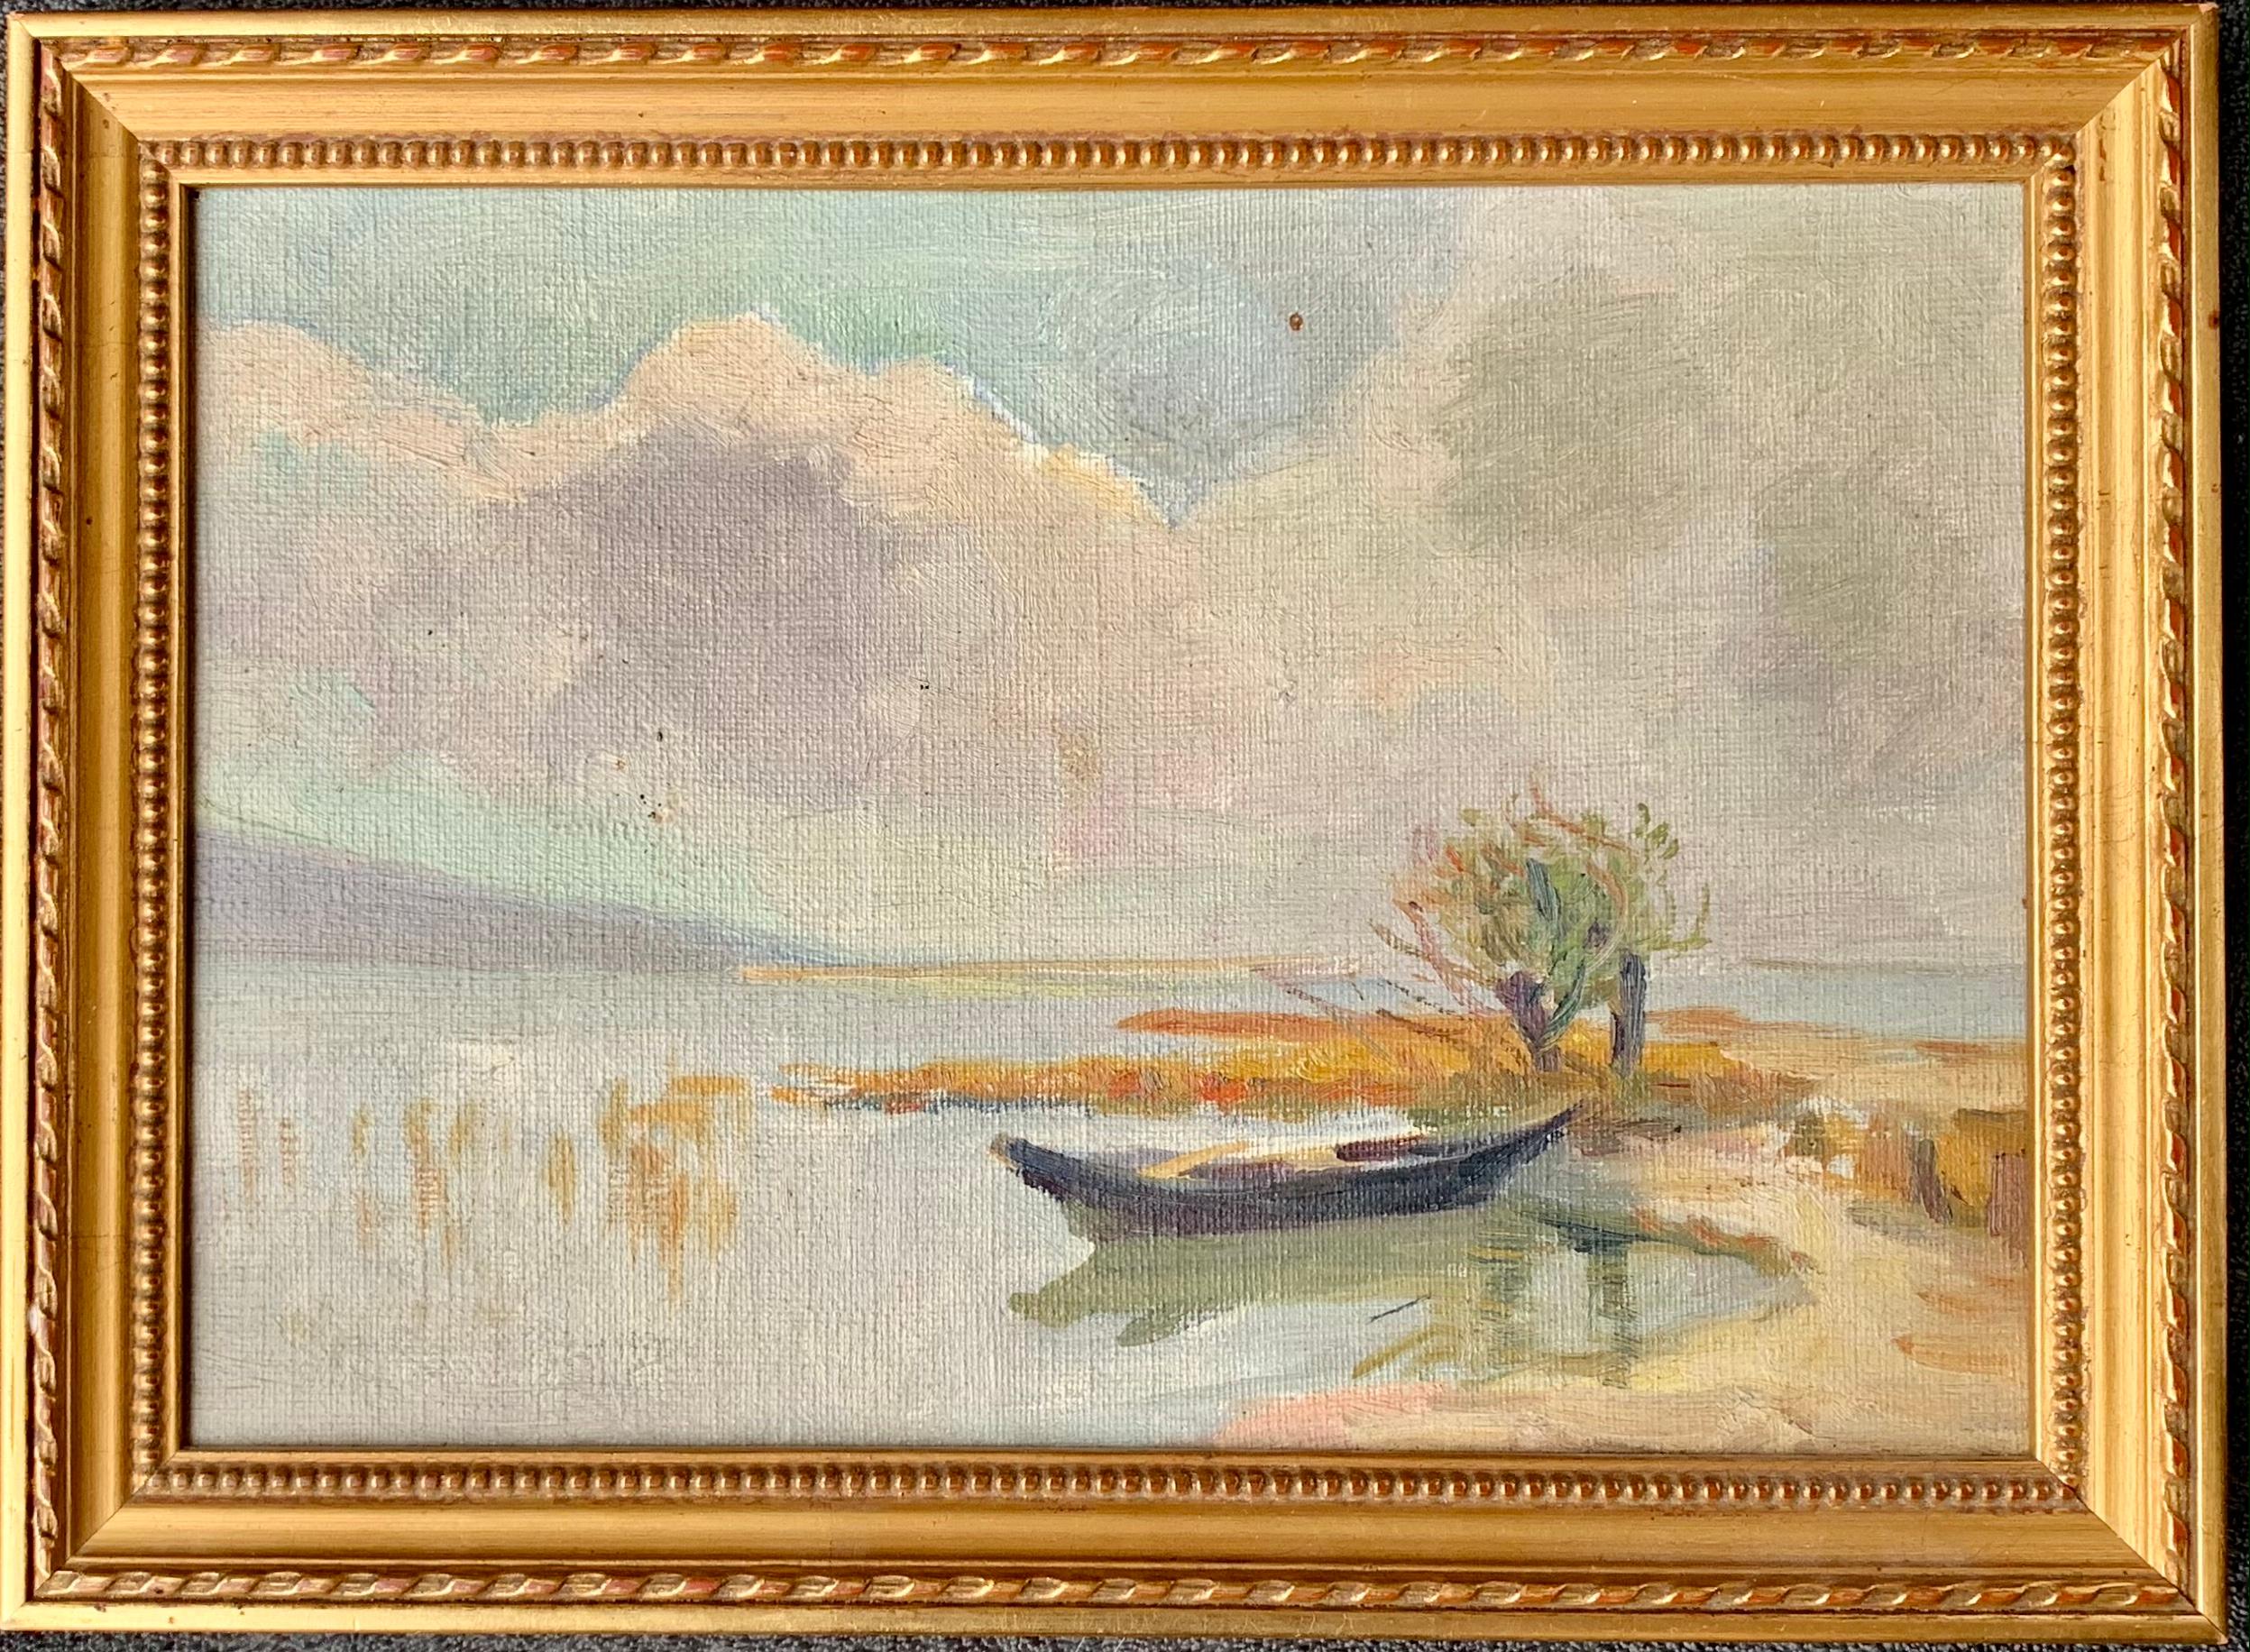 Unknown Landscape Painting - 19th century antique impressionist style painting - Lake Geneva - Landscape Lake